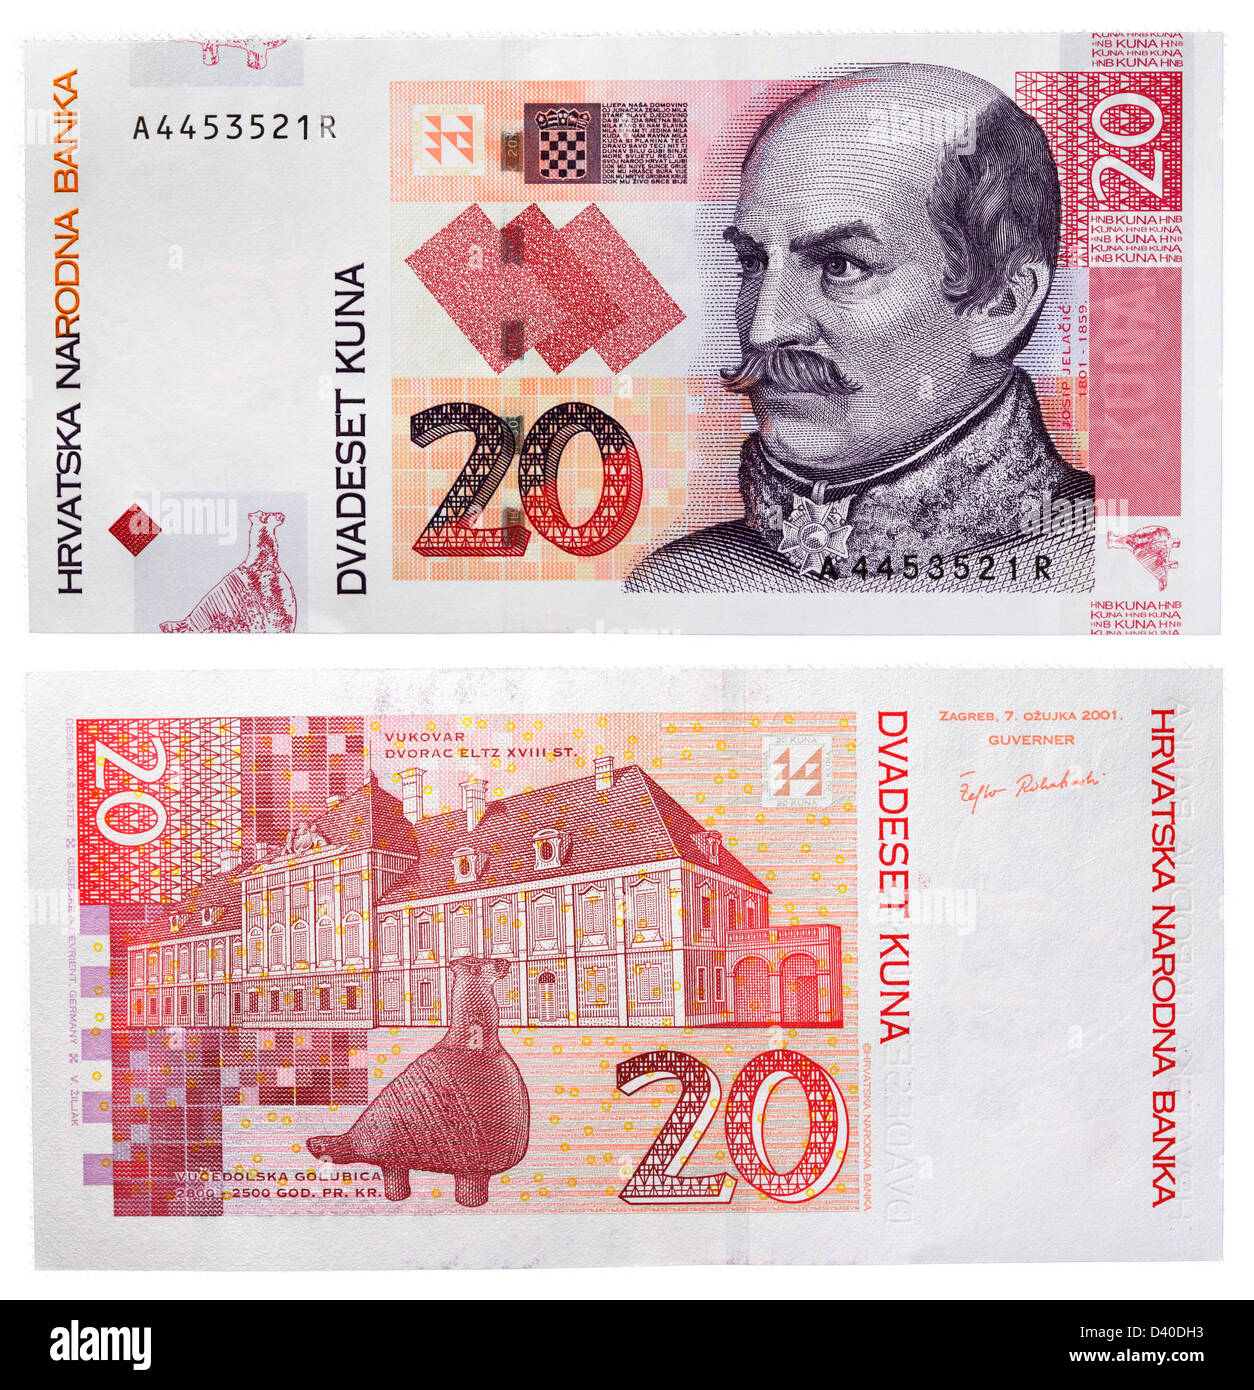 Croatia 20 Kuna p-39a 2001 UNC Banknote 